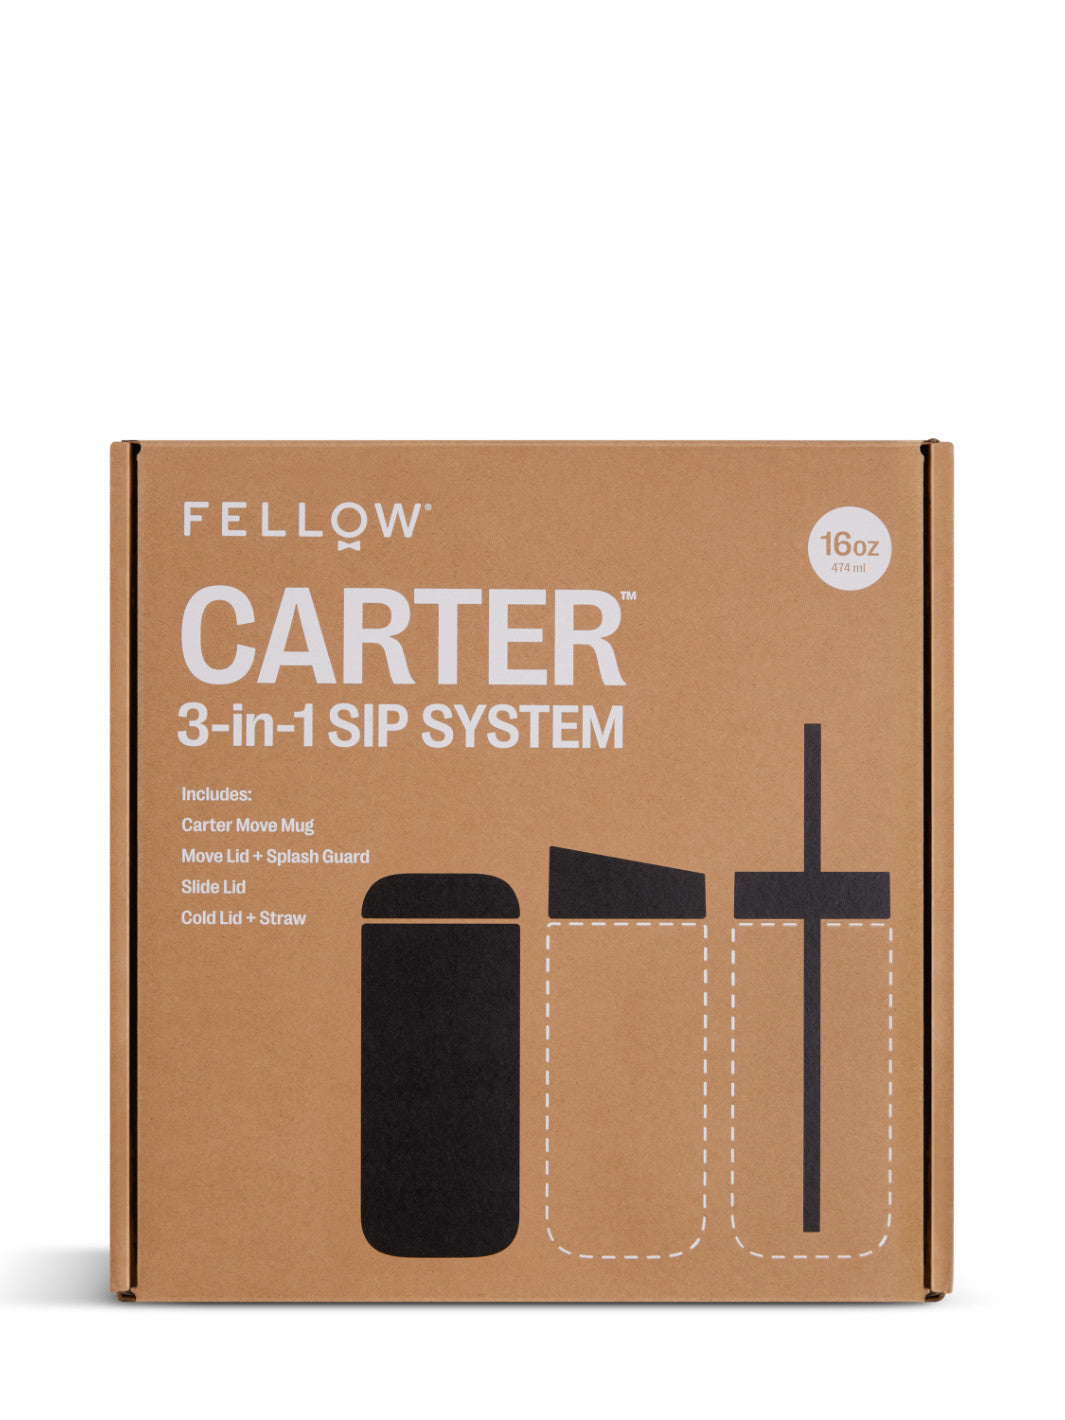 FELLOW Carter 3-in-1 Sip System (16oz/473ml)